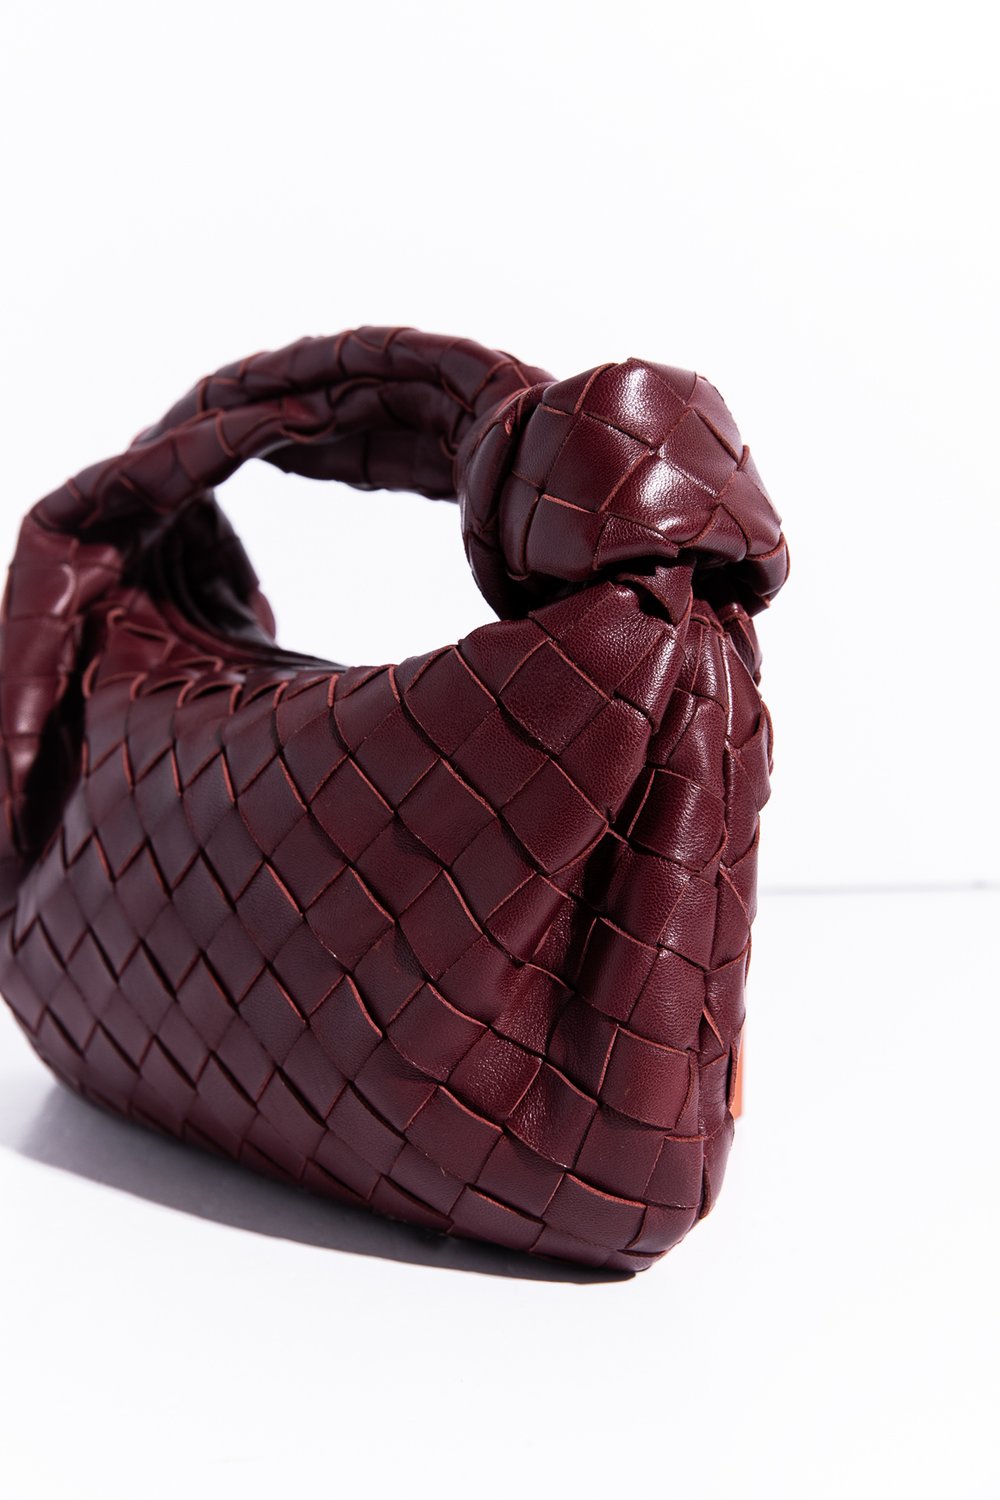 Bottega Veneta Women's Mini Jodie Hobo Bag